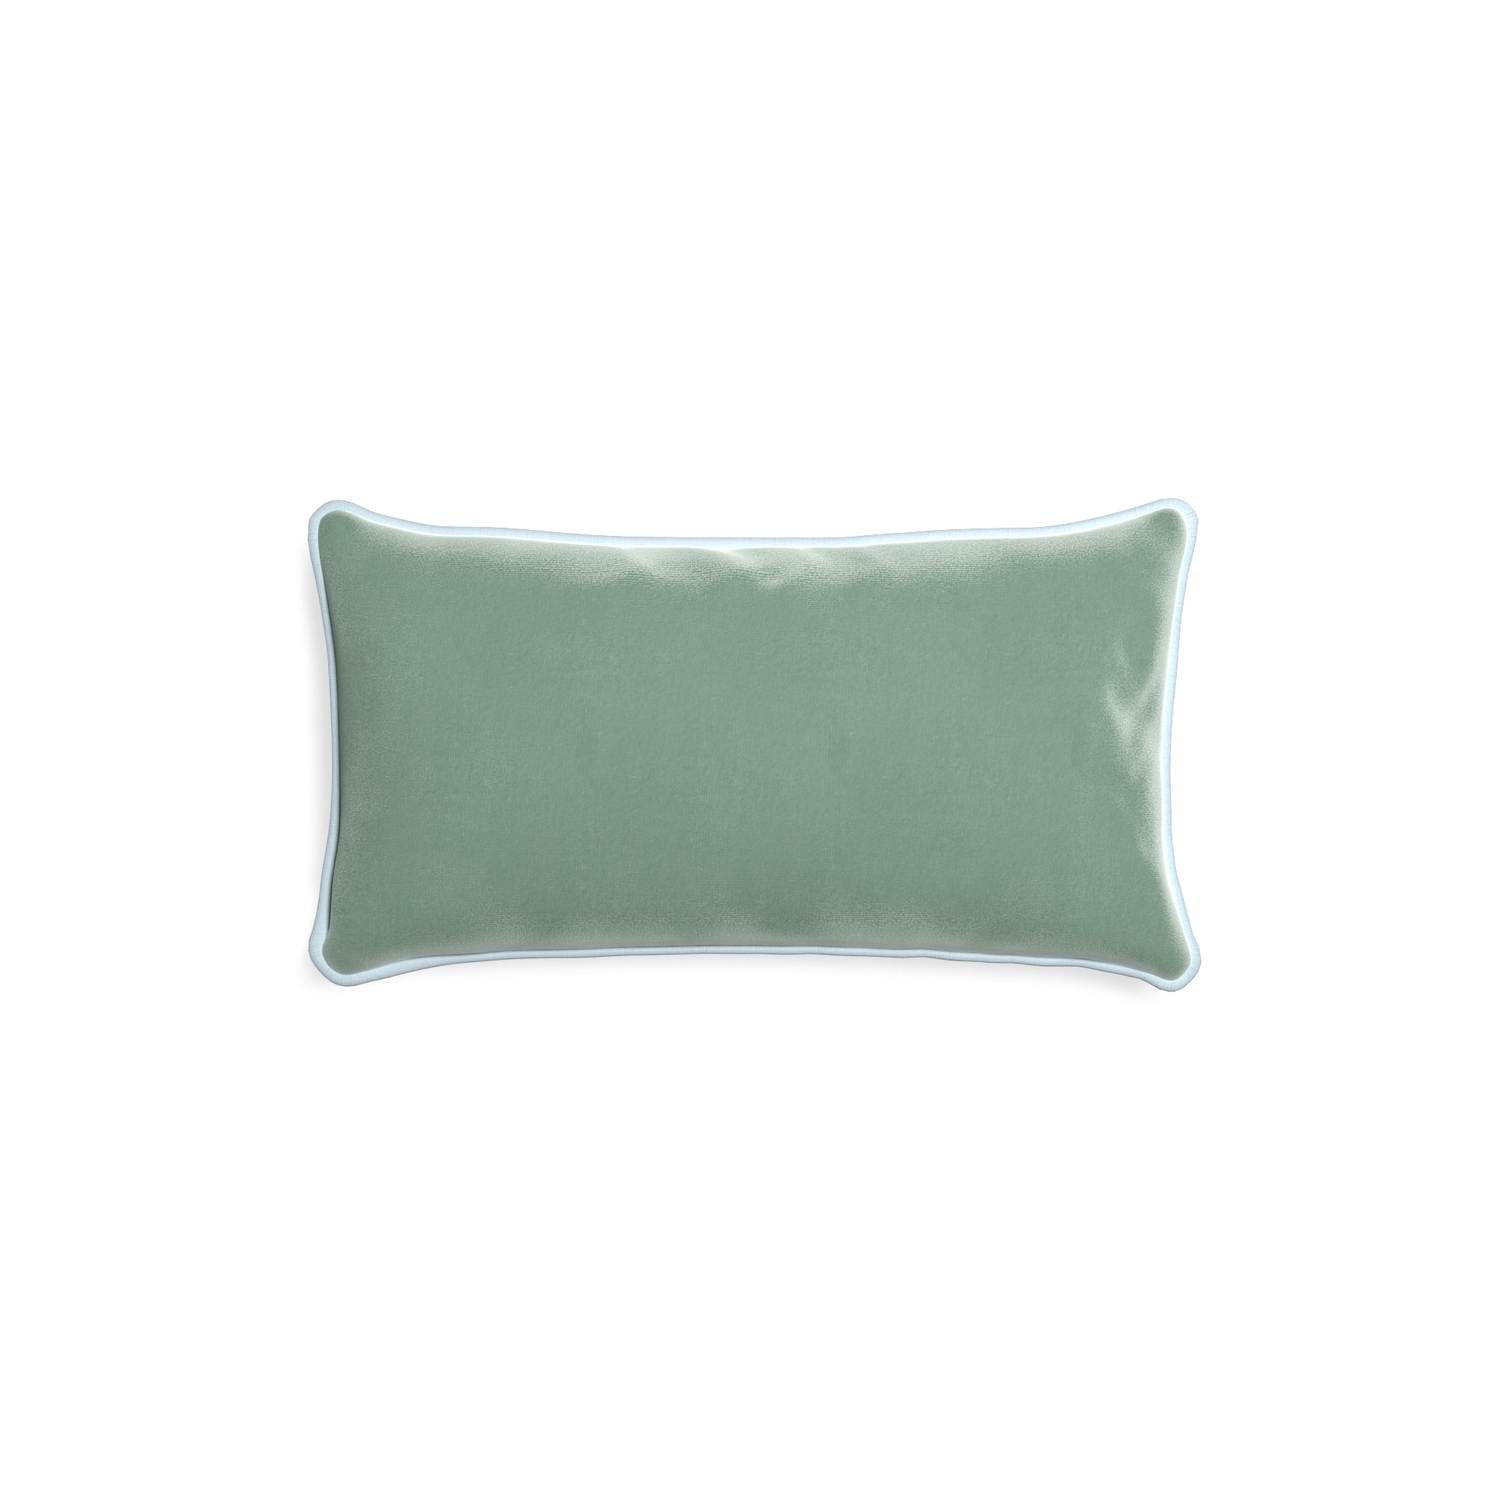 rectangle blue green velvet pillow with light blue piping